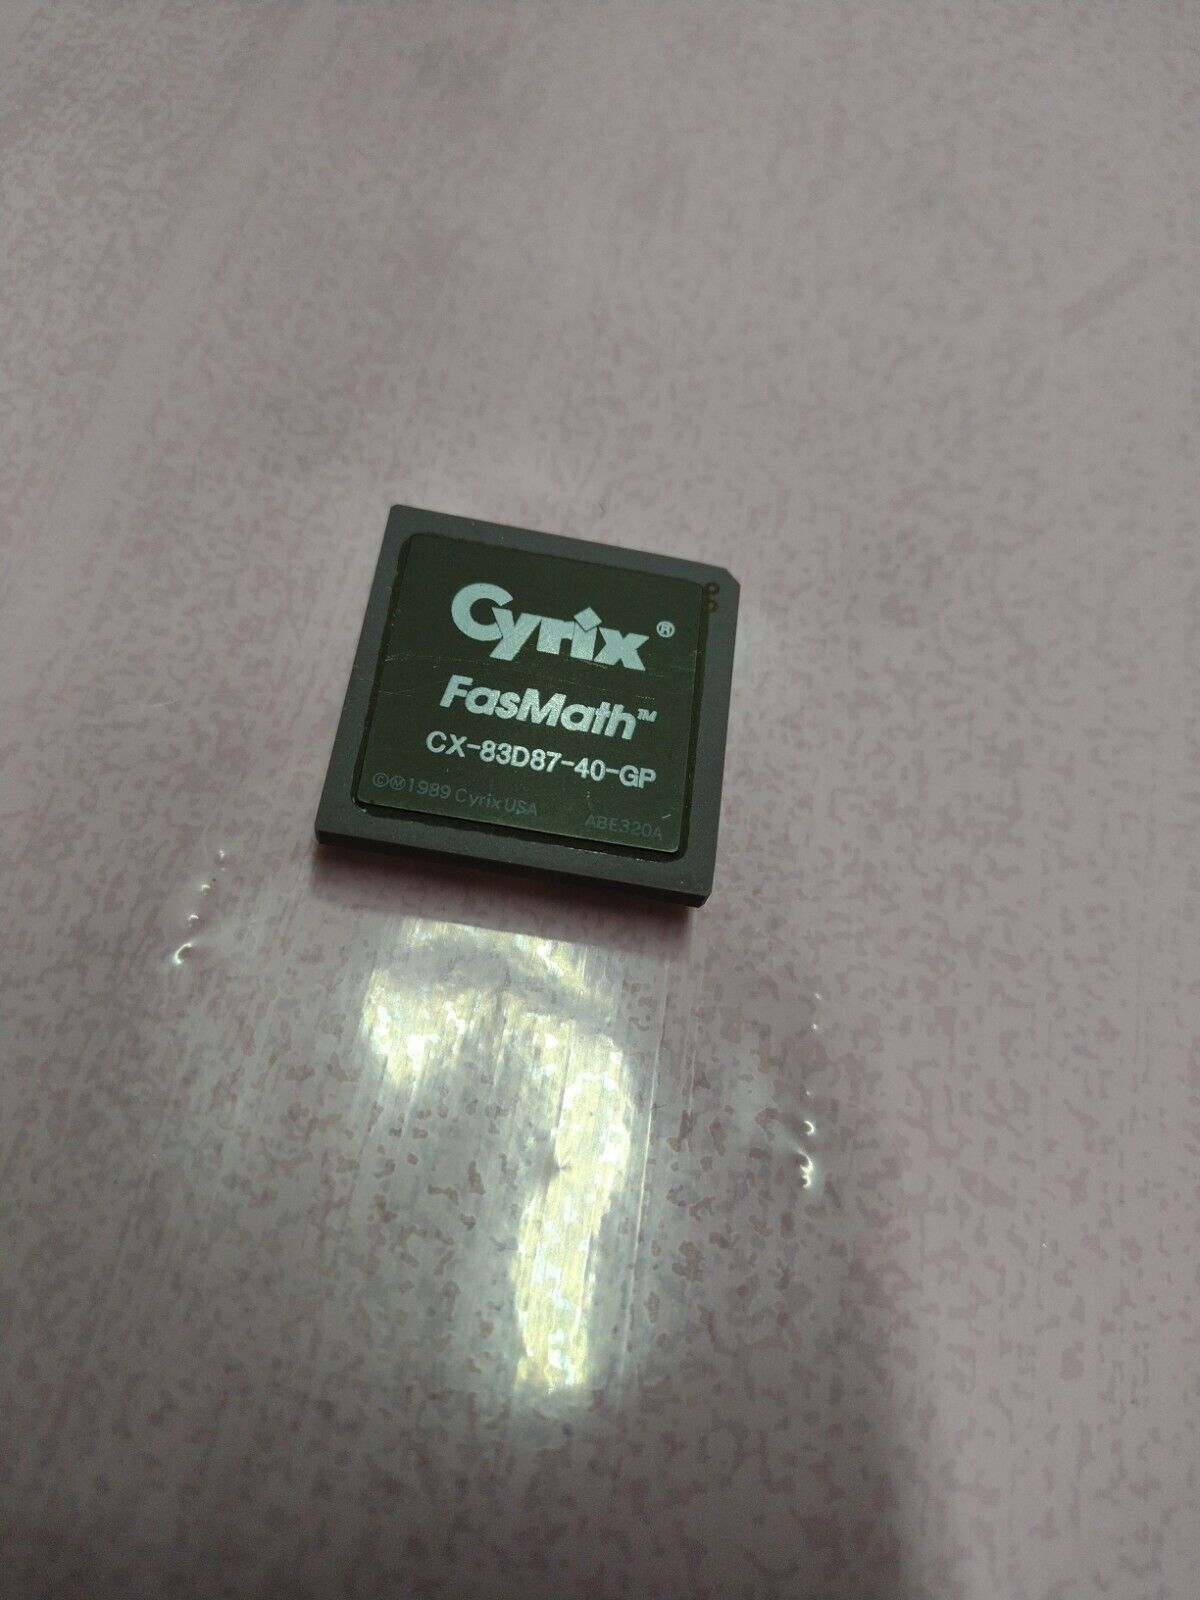 CYRIX CX-83D87-40-GP Fasmath Math Coprocessor for 386DX CPU 40MHz 